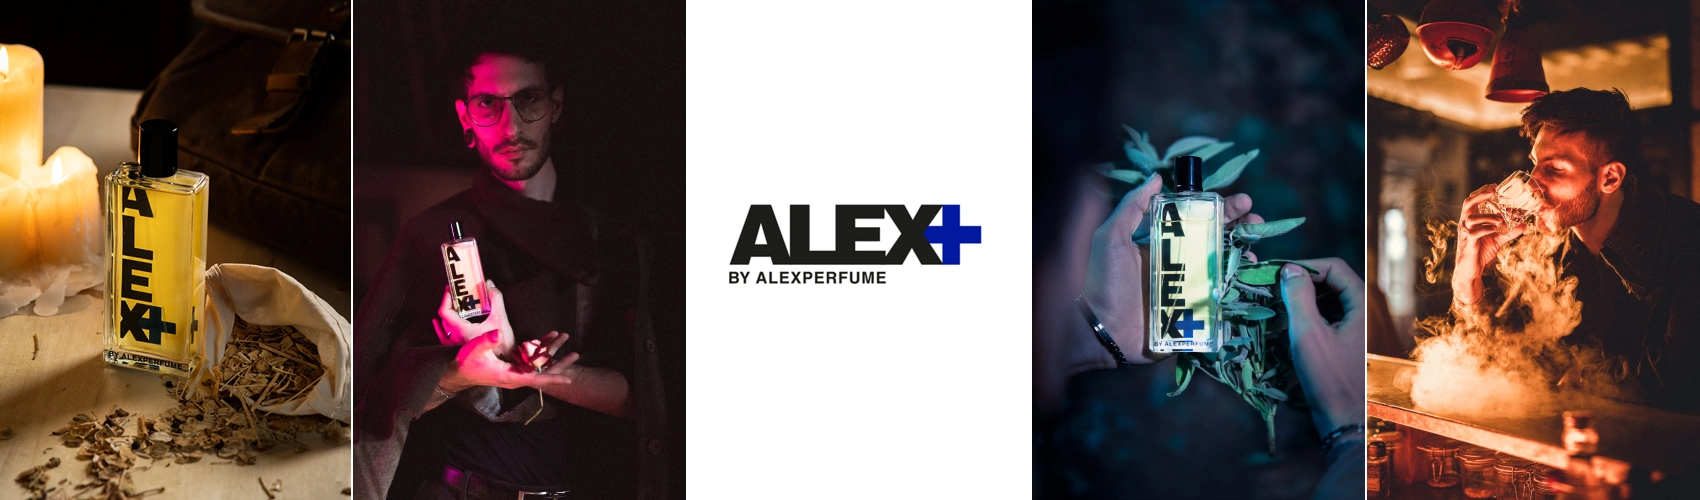 alex+ alexperfume